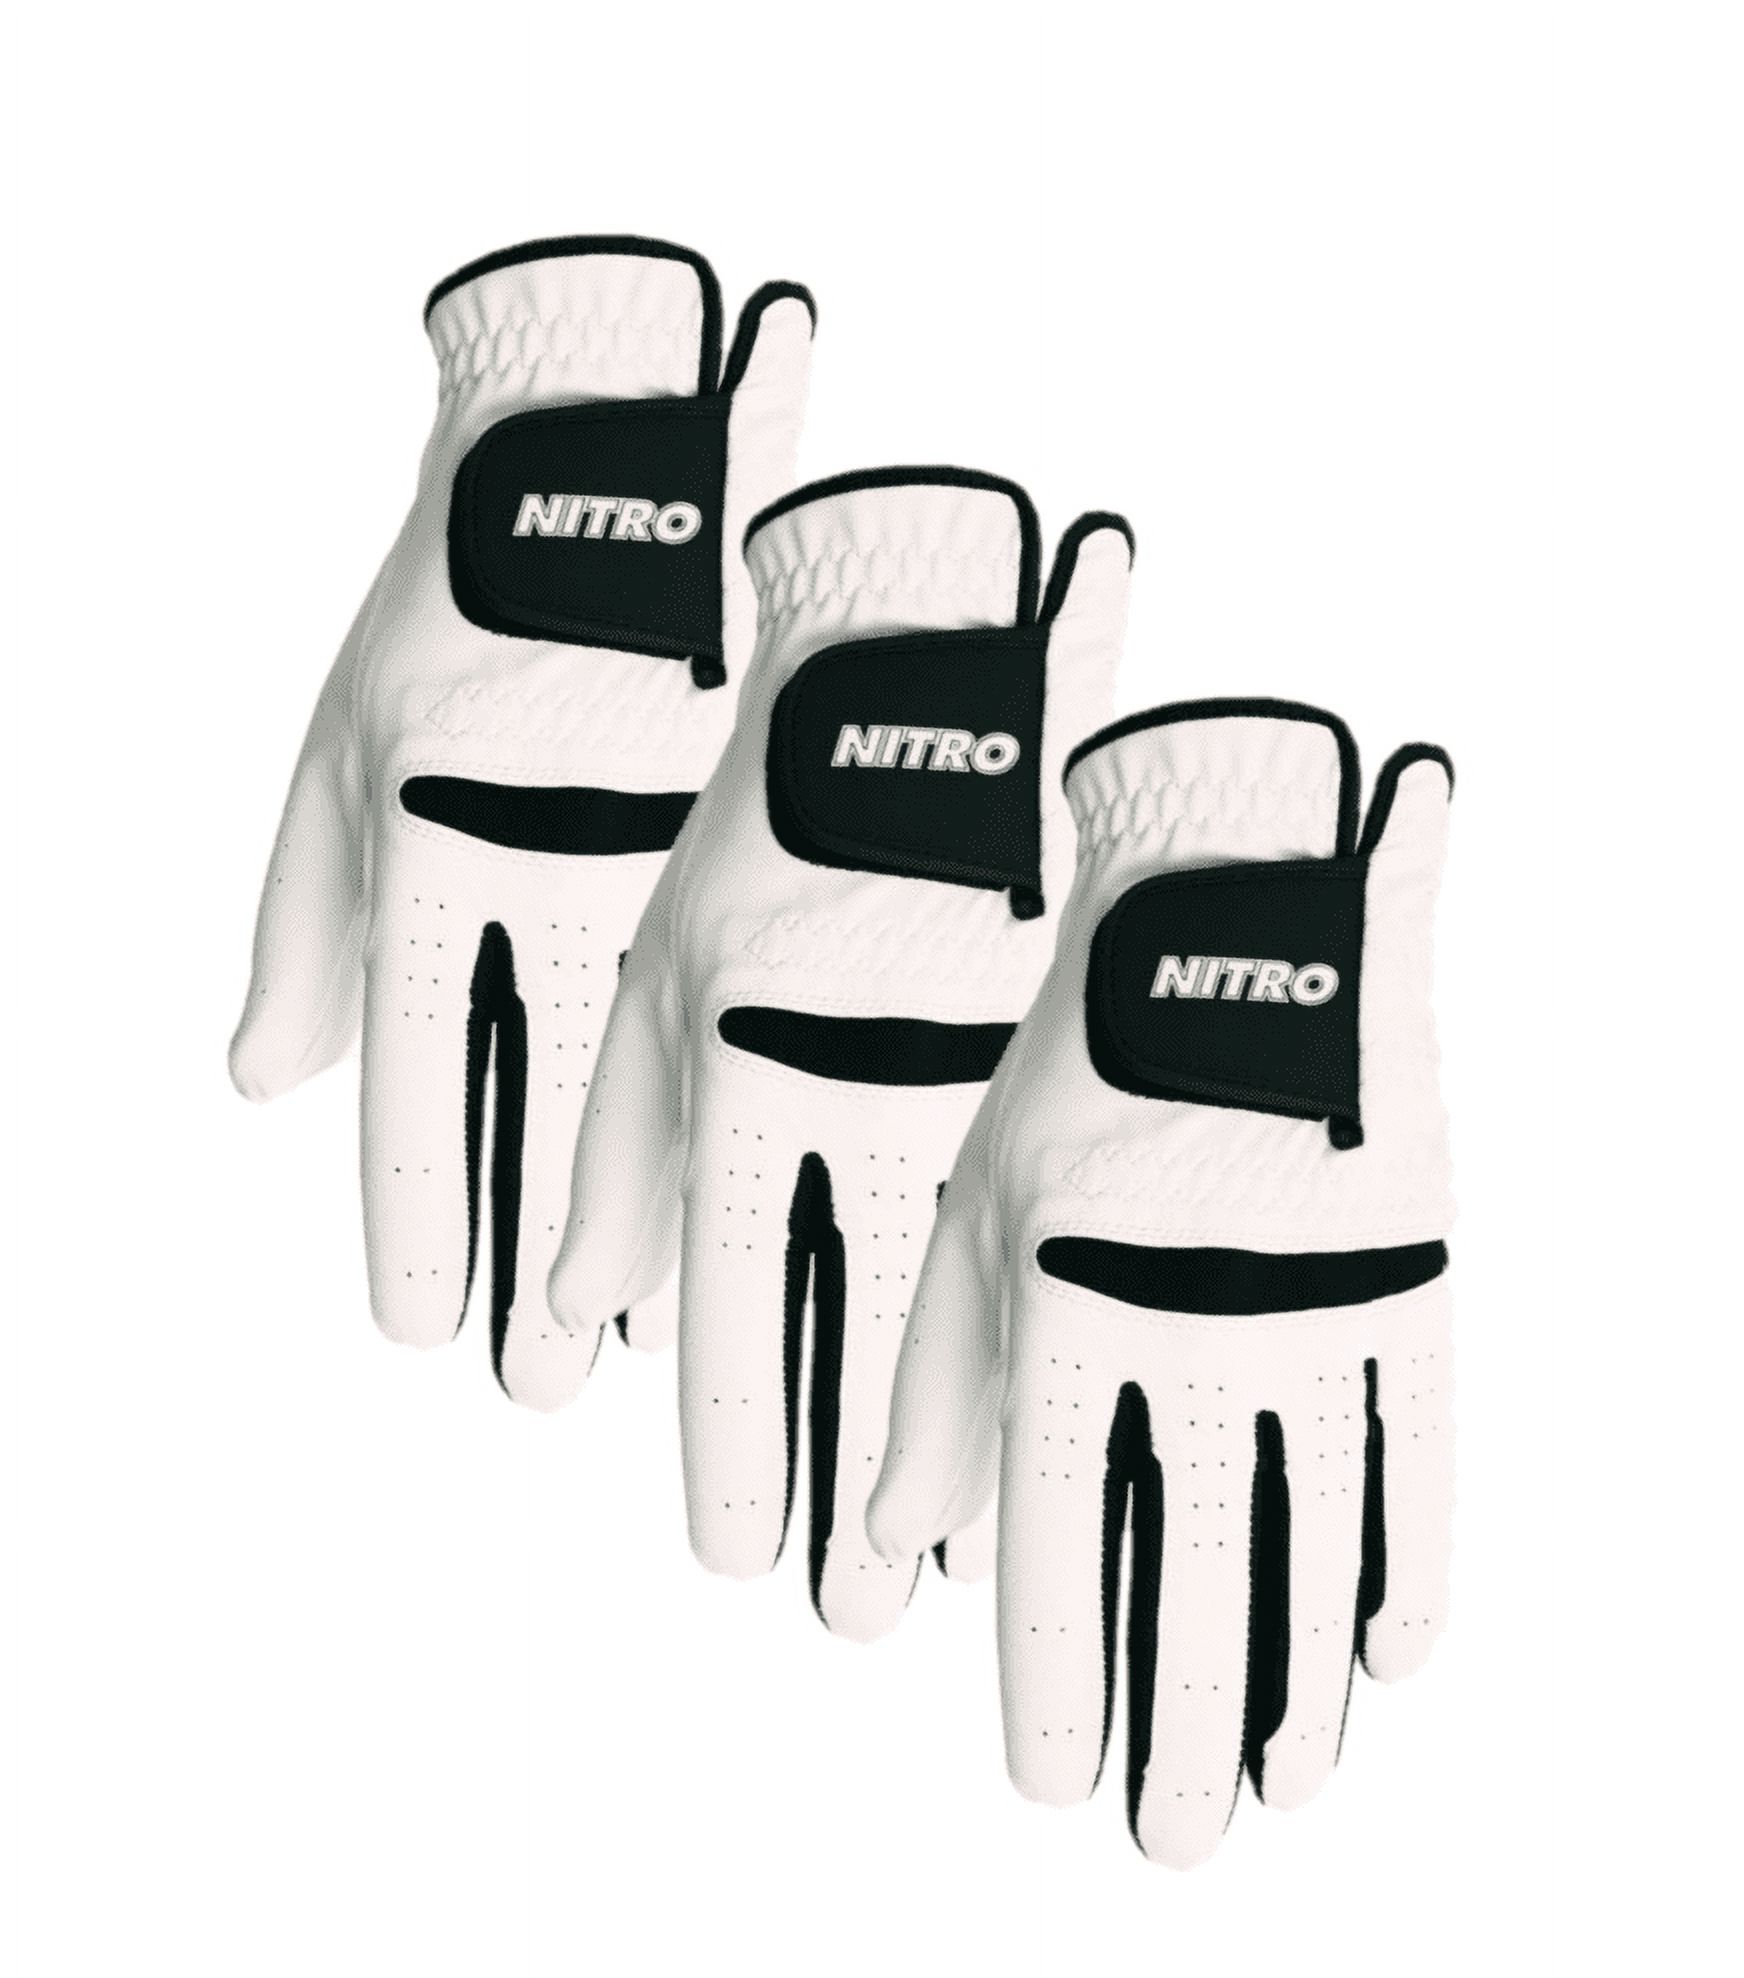 NITRO CROSSFIRE PERFORMANCE GOLF GLOVE MENS WHITE/BLACK EXTRA LARGE 3 Pk Gloves - image 1 of 2